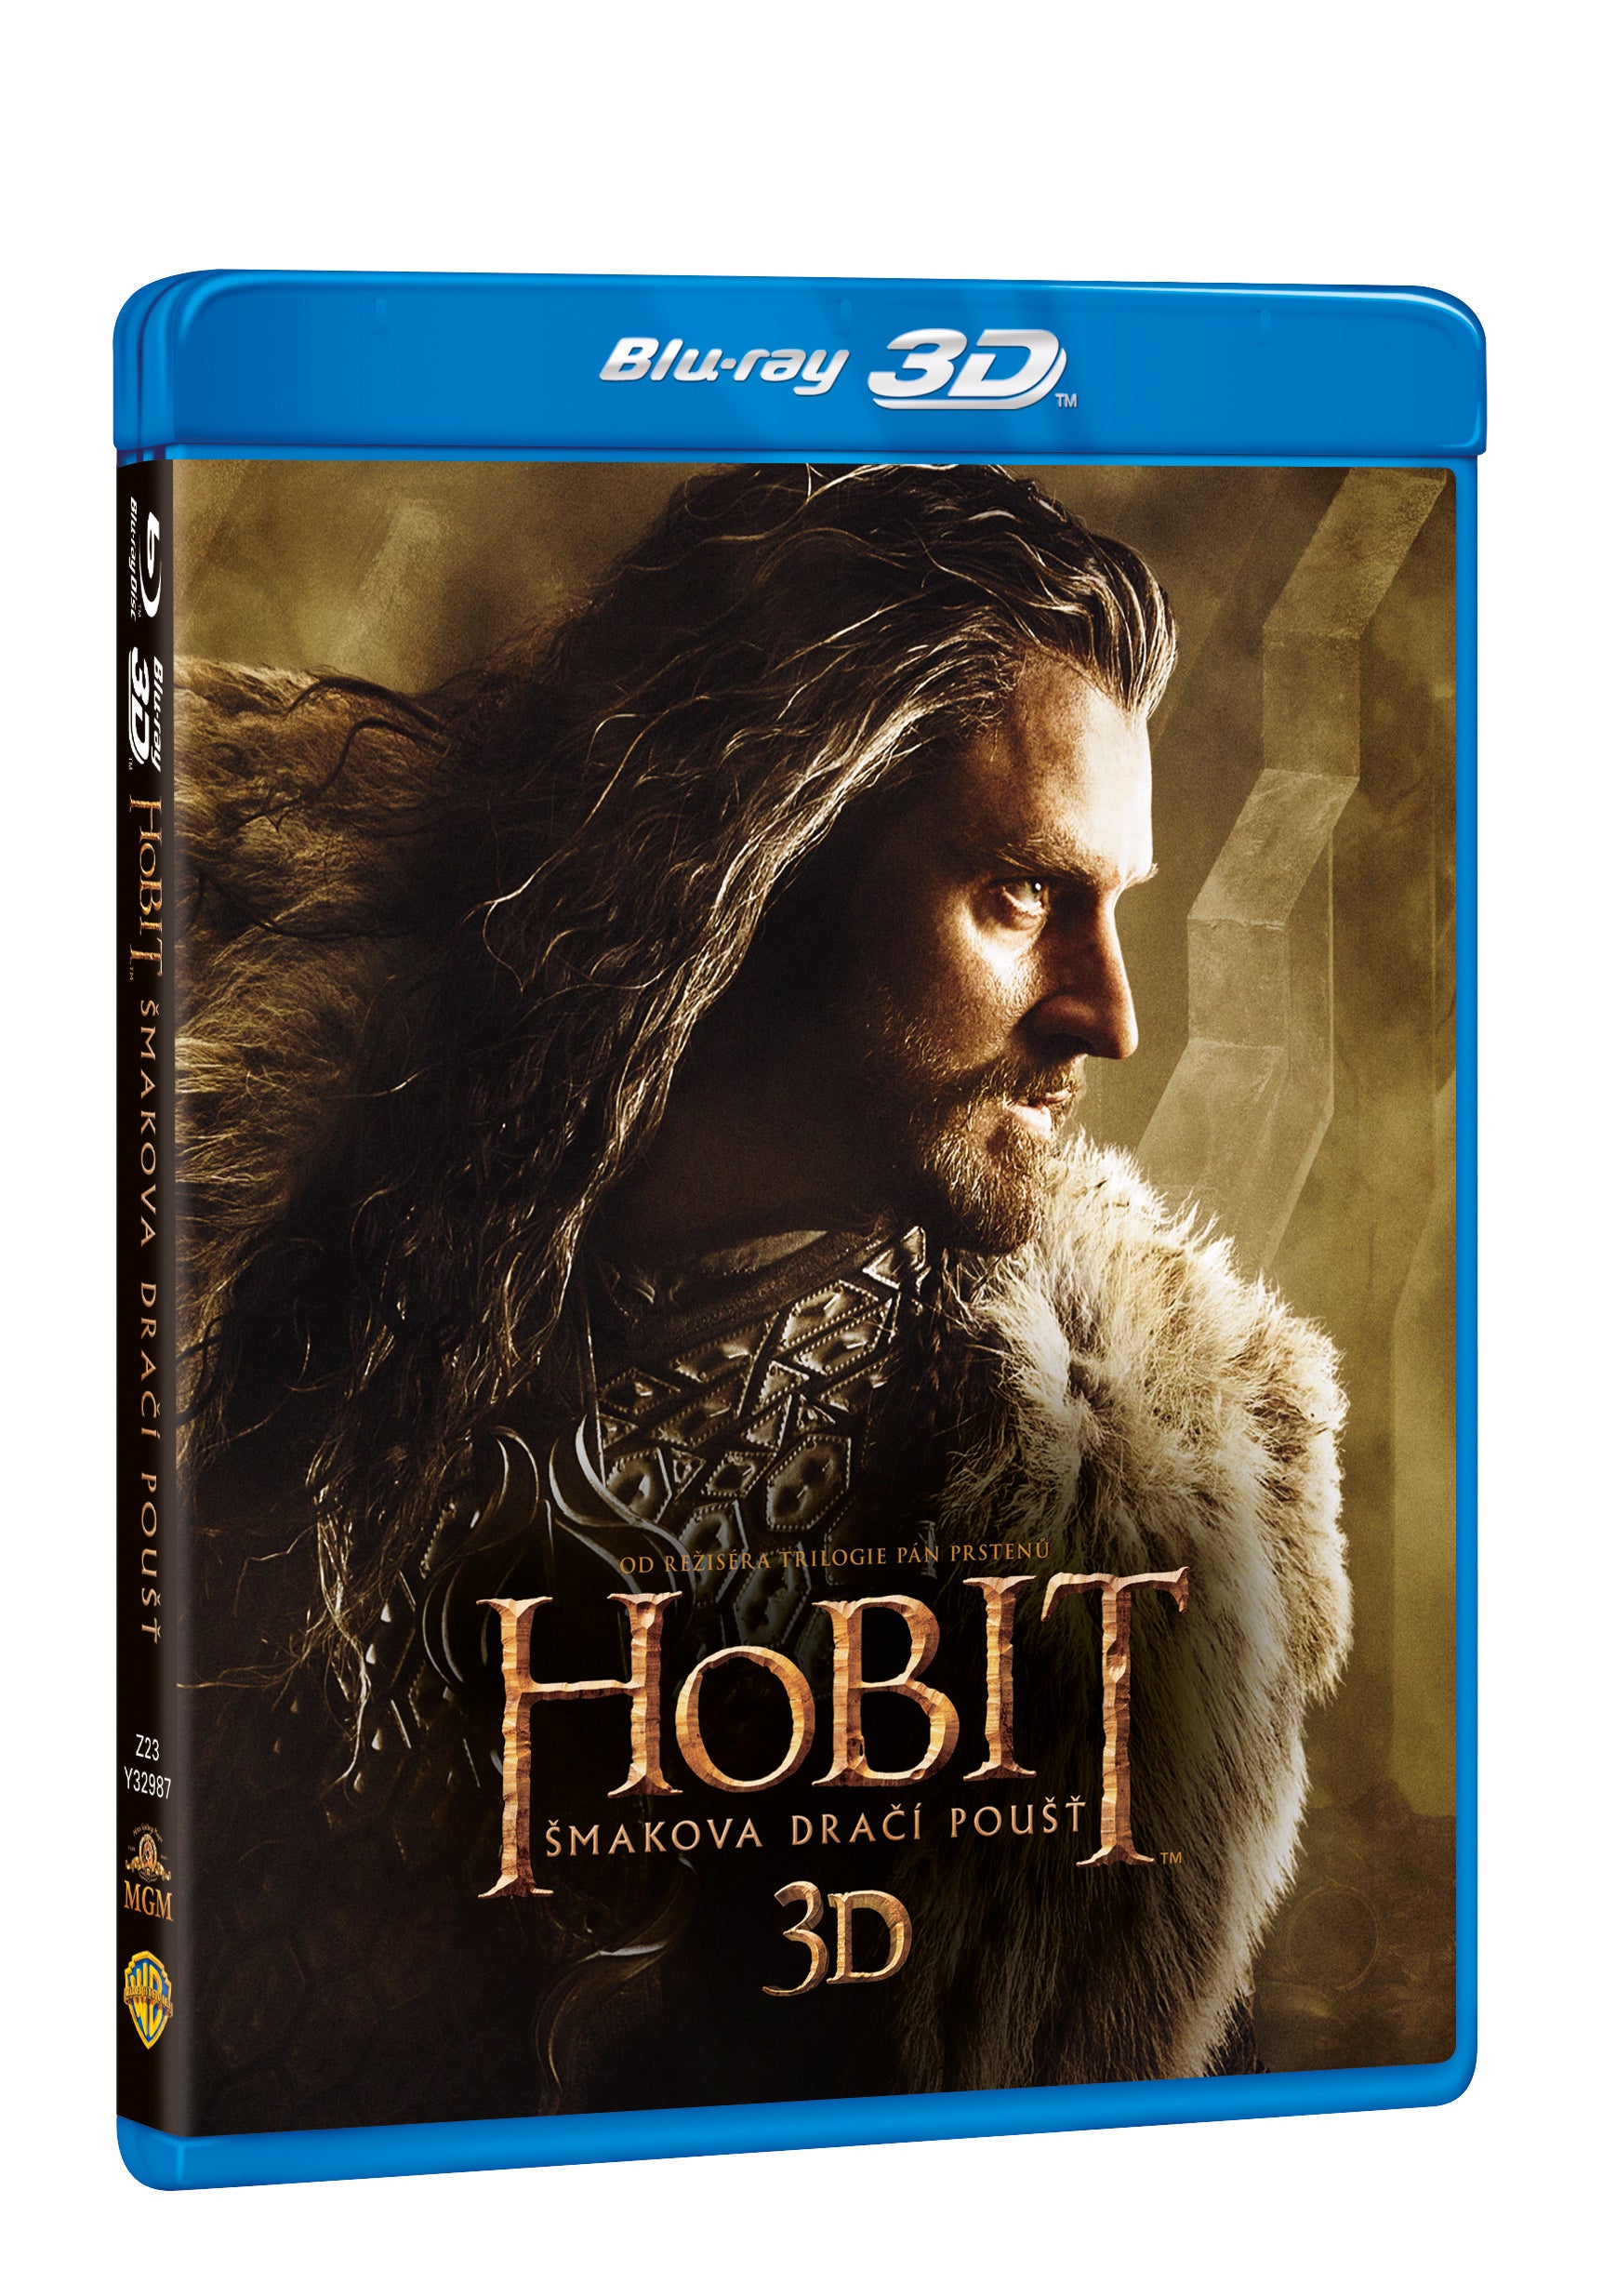 Hobit: Smakova draci poust 4BD (3D+2D) / The Hobbit: The Desolation of Smaug - Czech version